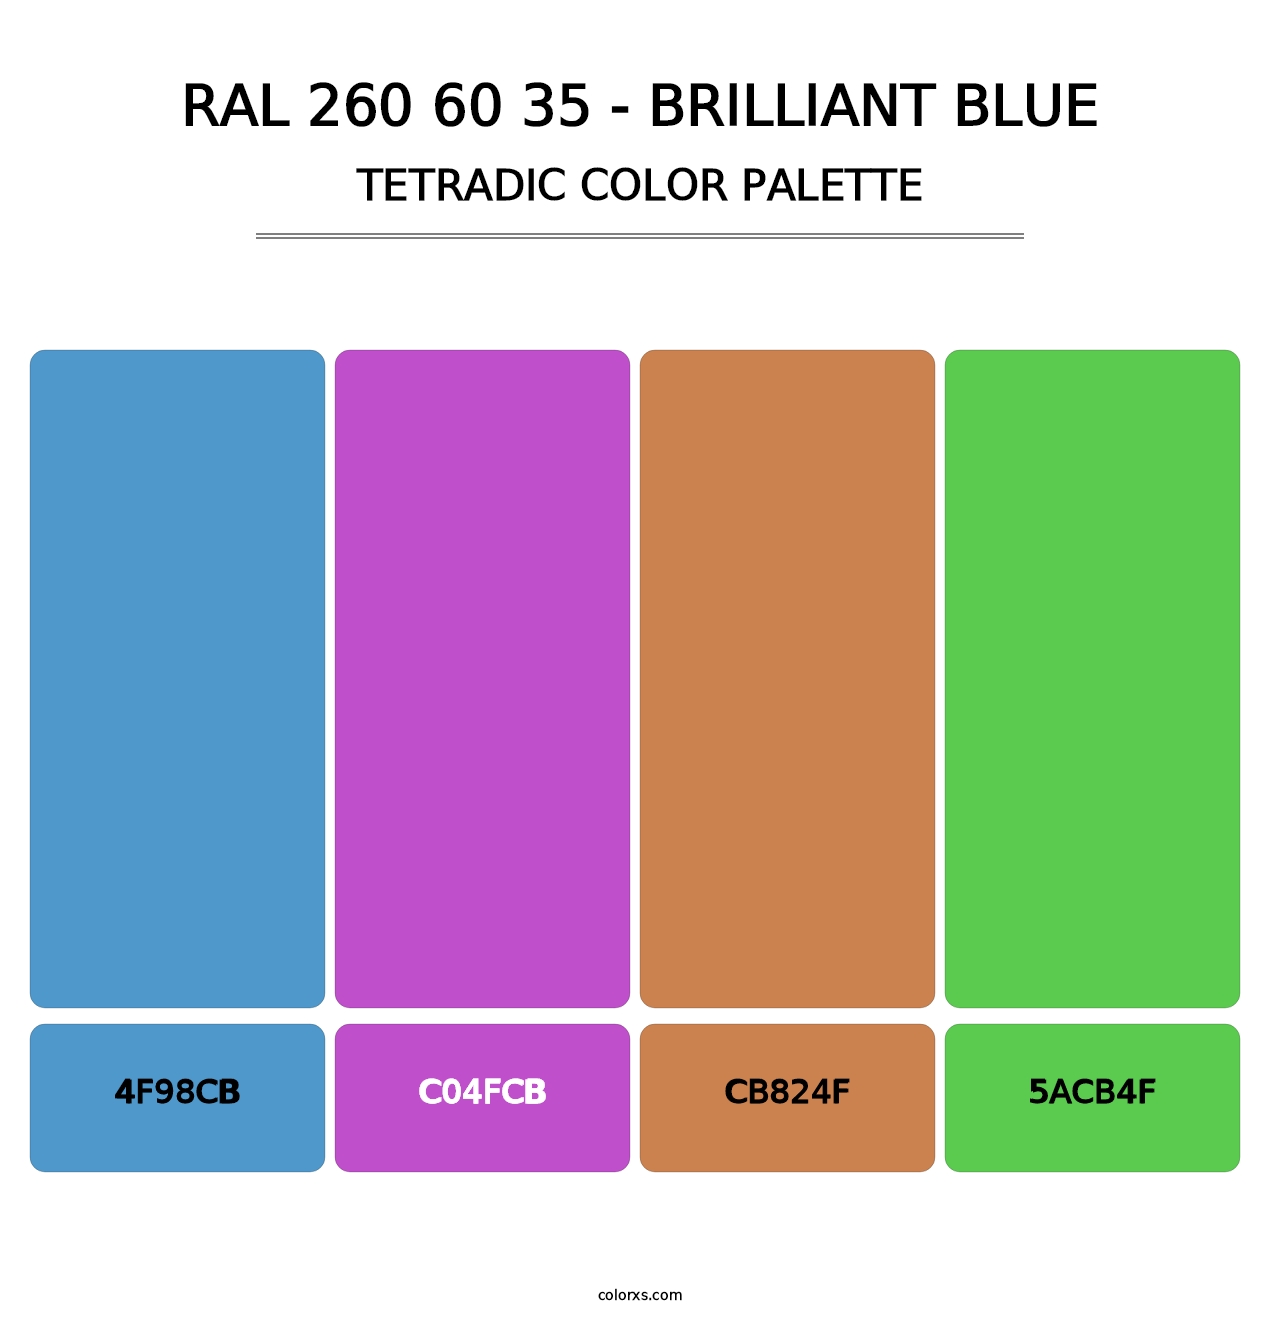 RAL 260 60 35 - Brilliant Blue - Tetradic Color Palette